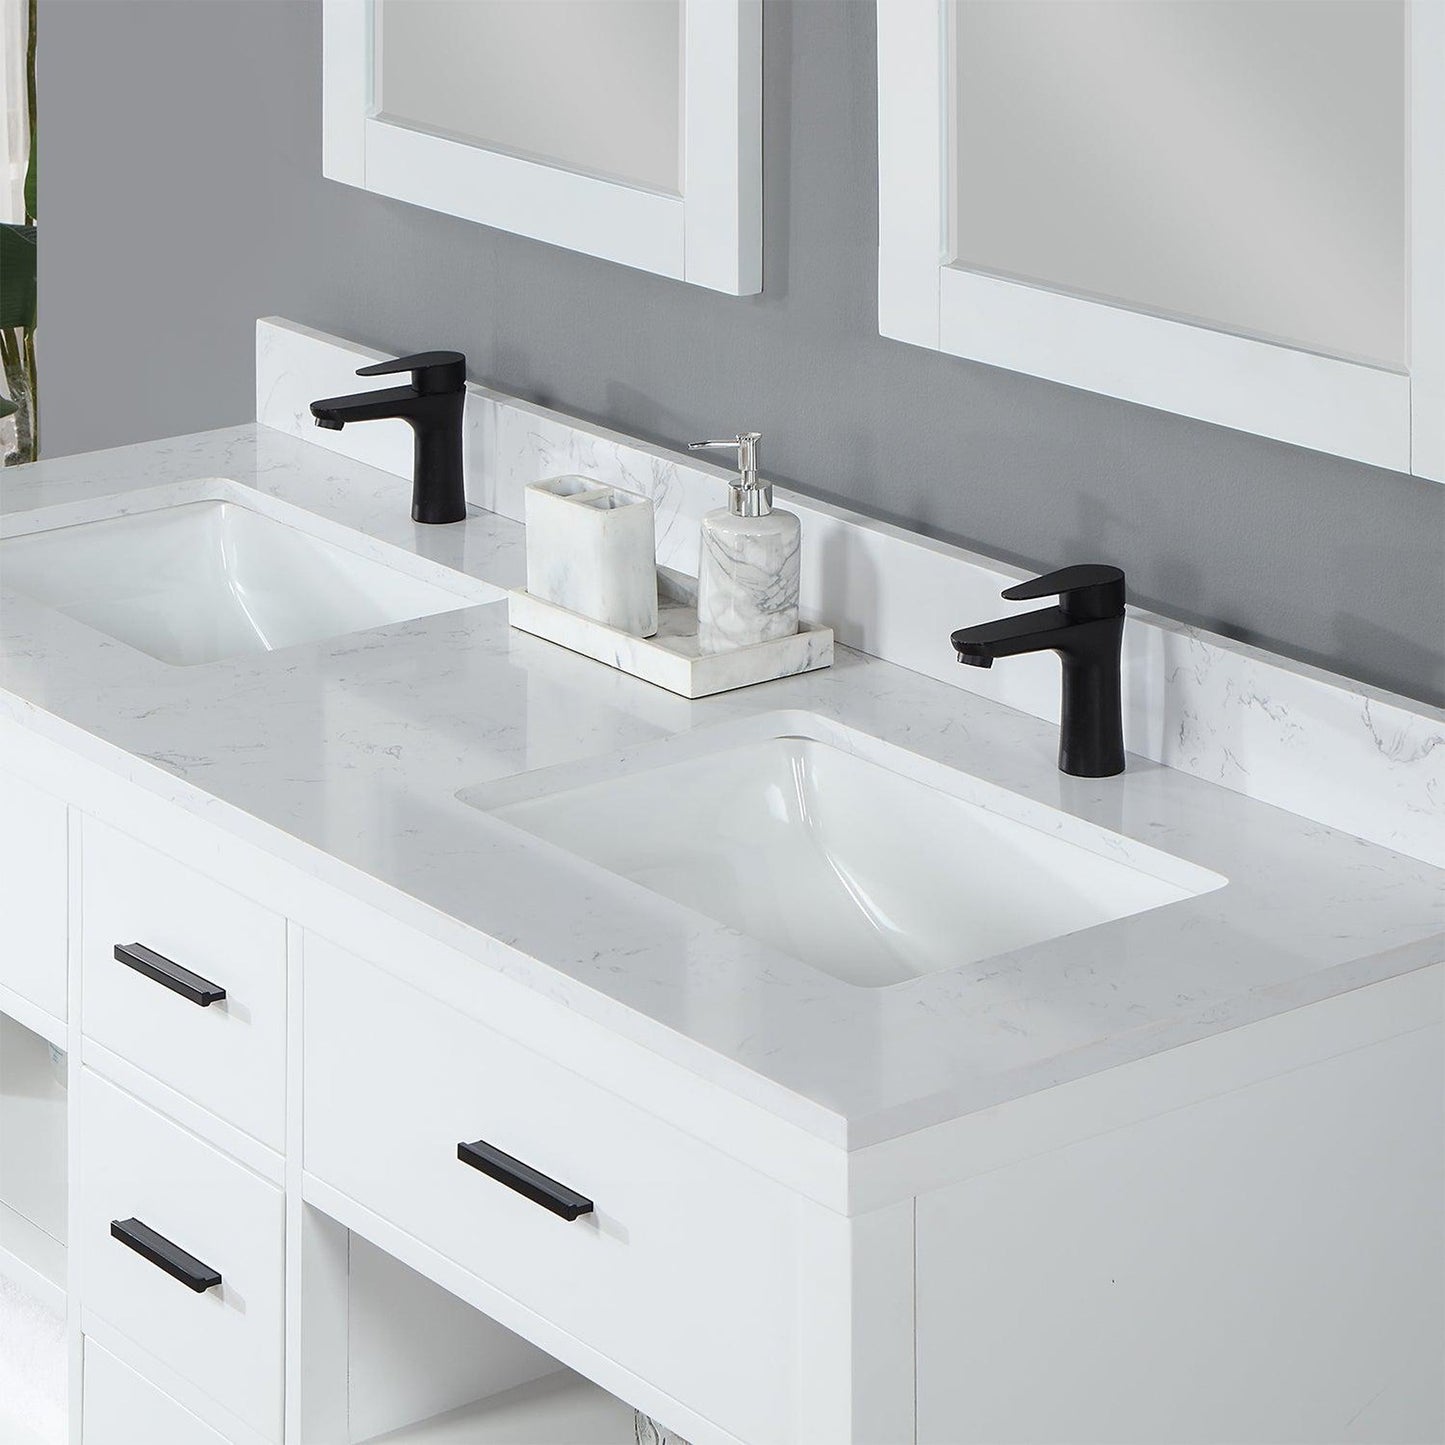 Altair Kesia 60" White Freestanding Double Bathroom Vanity Set With Mirror, Stylish Aosta White Composite Stone Top, Two Rectangular Undermount Ceramic Sinks, Overflow, and Backsplash